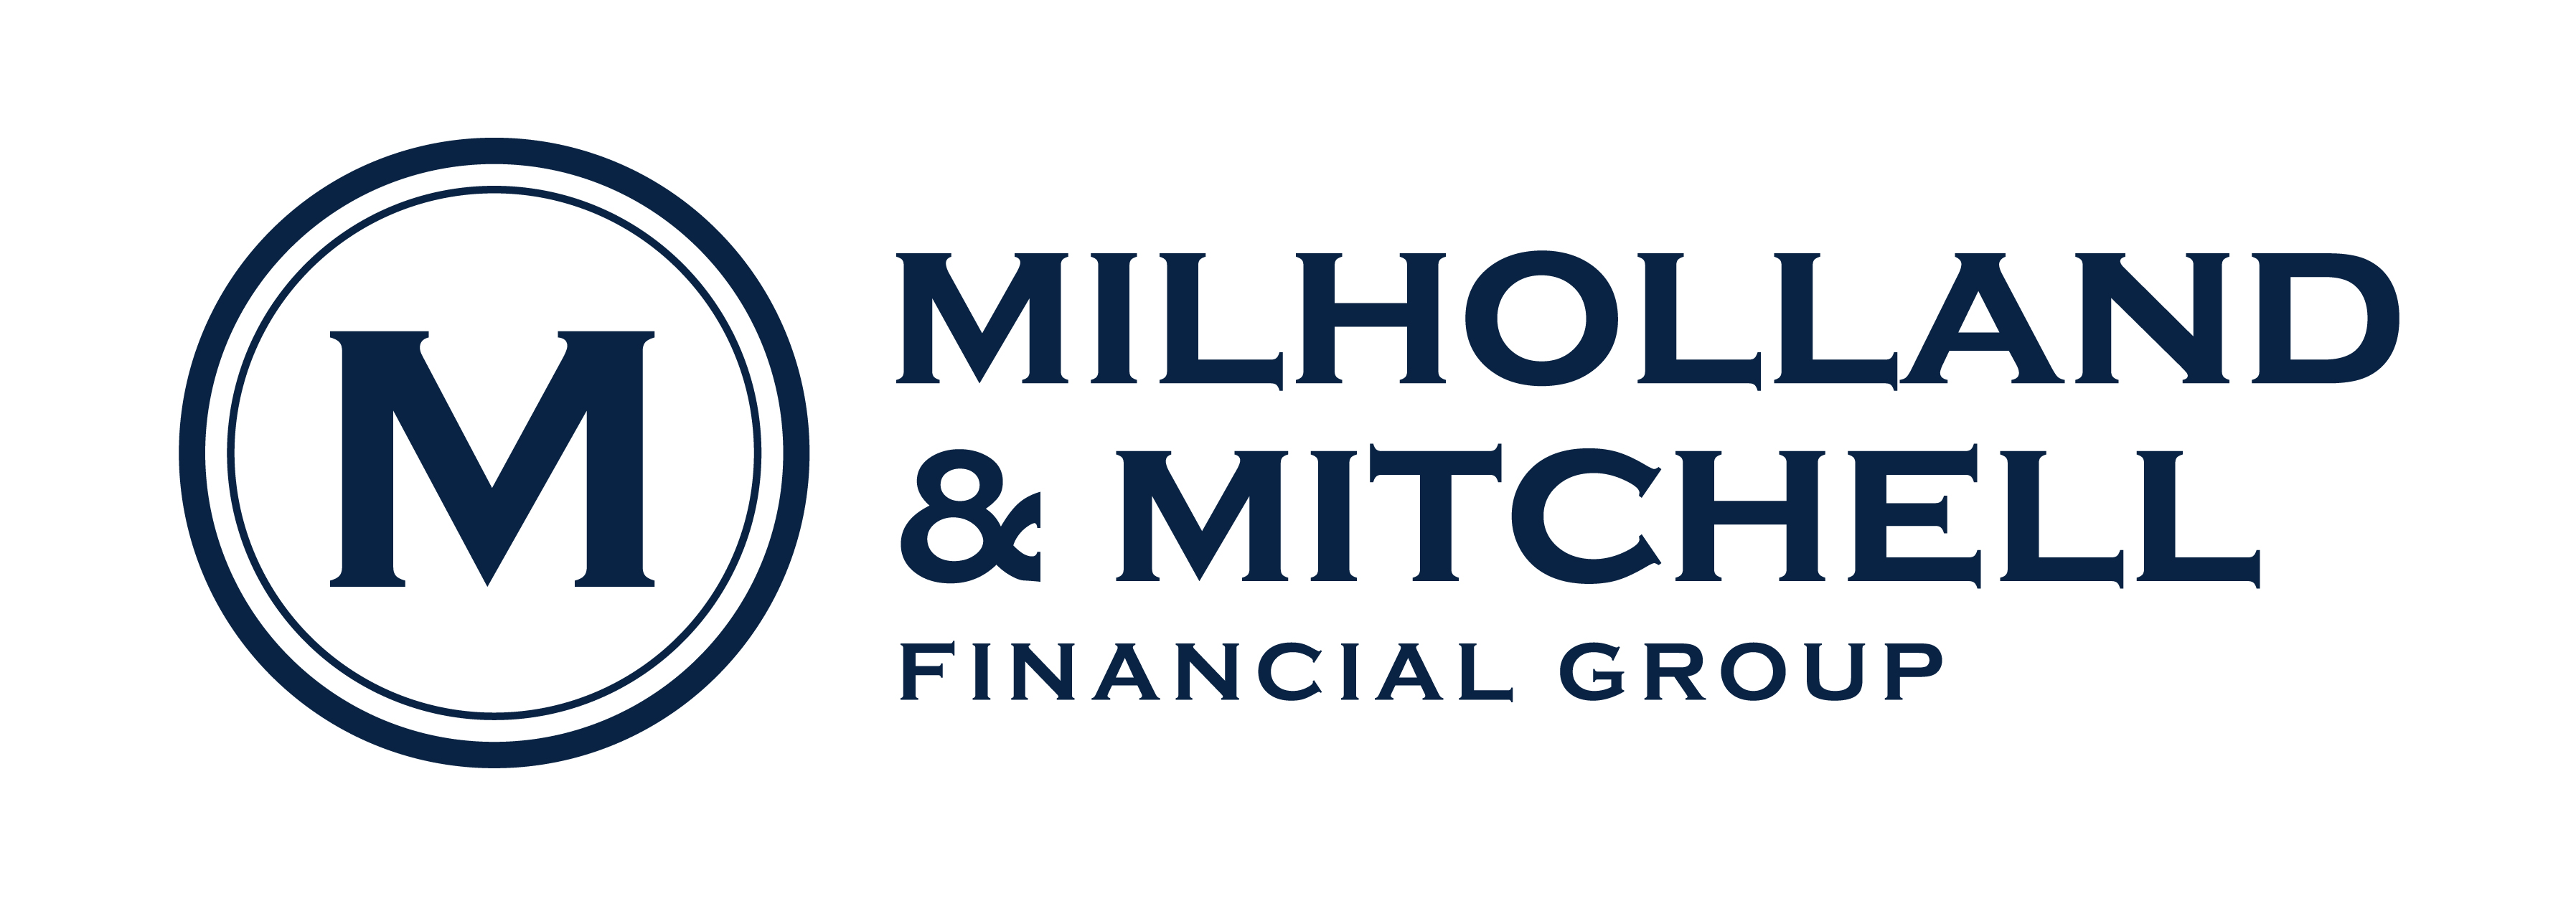 Milholland & Mitchell Financial Group logo